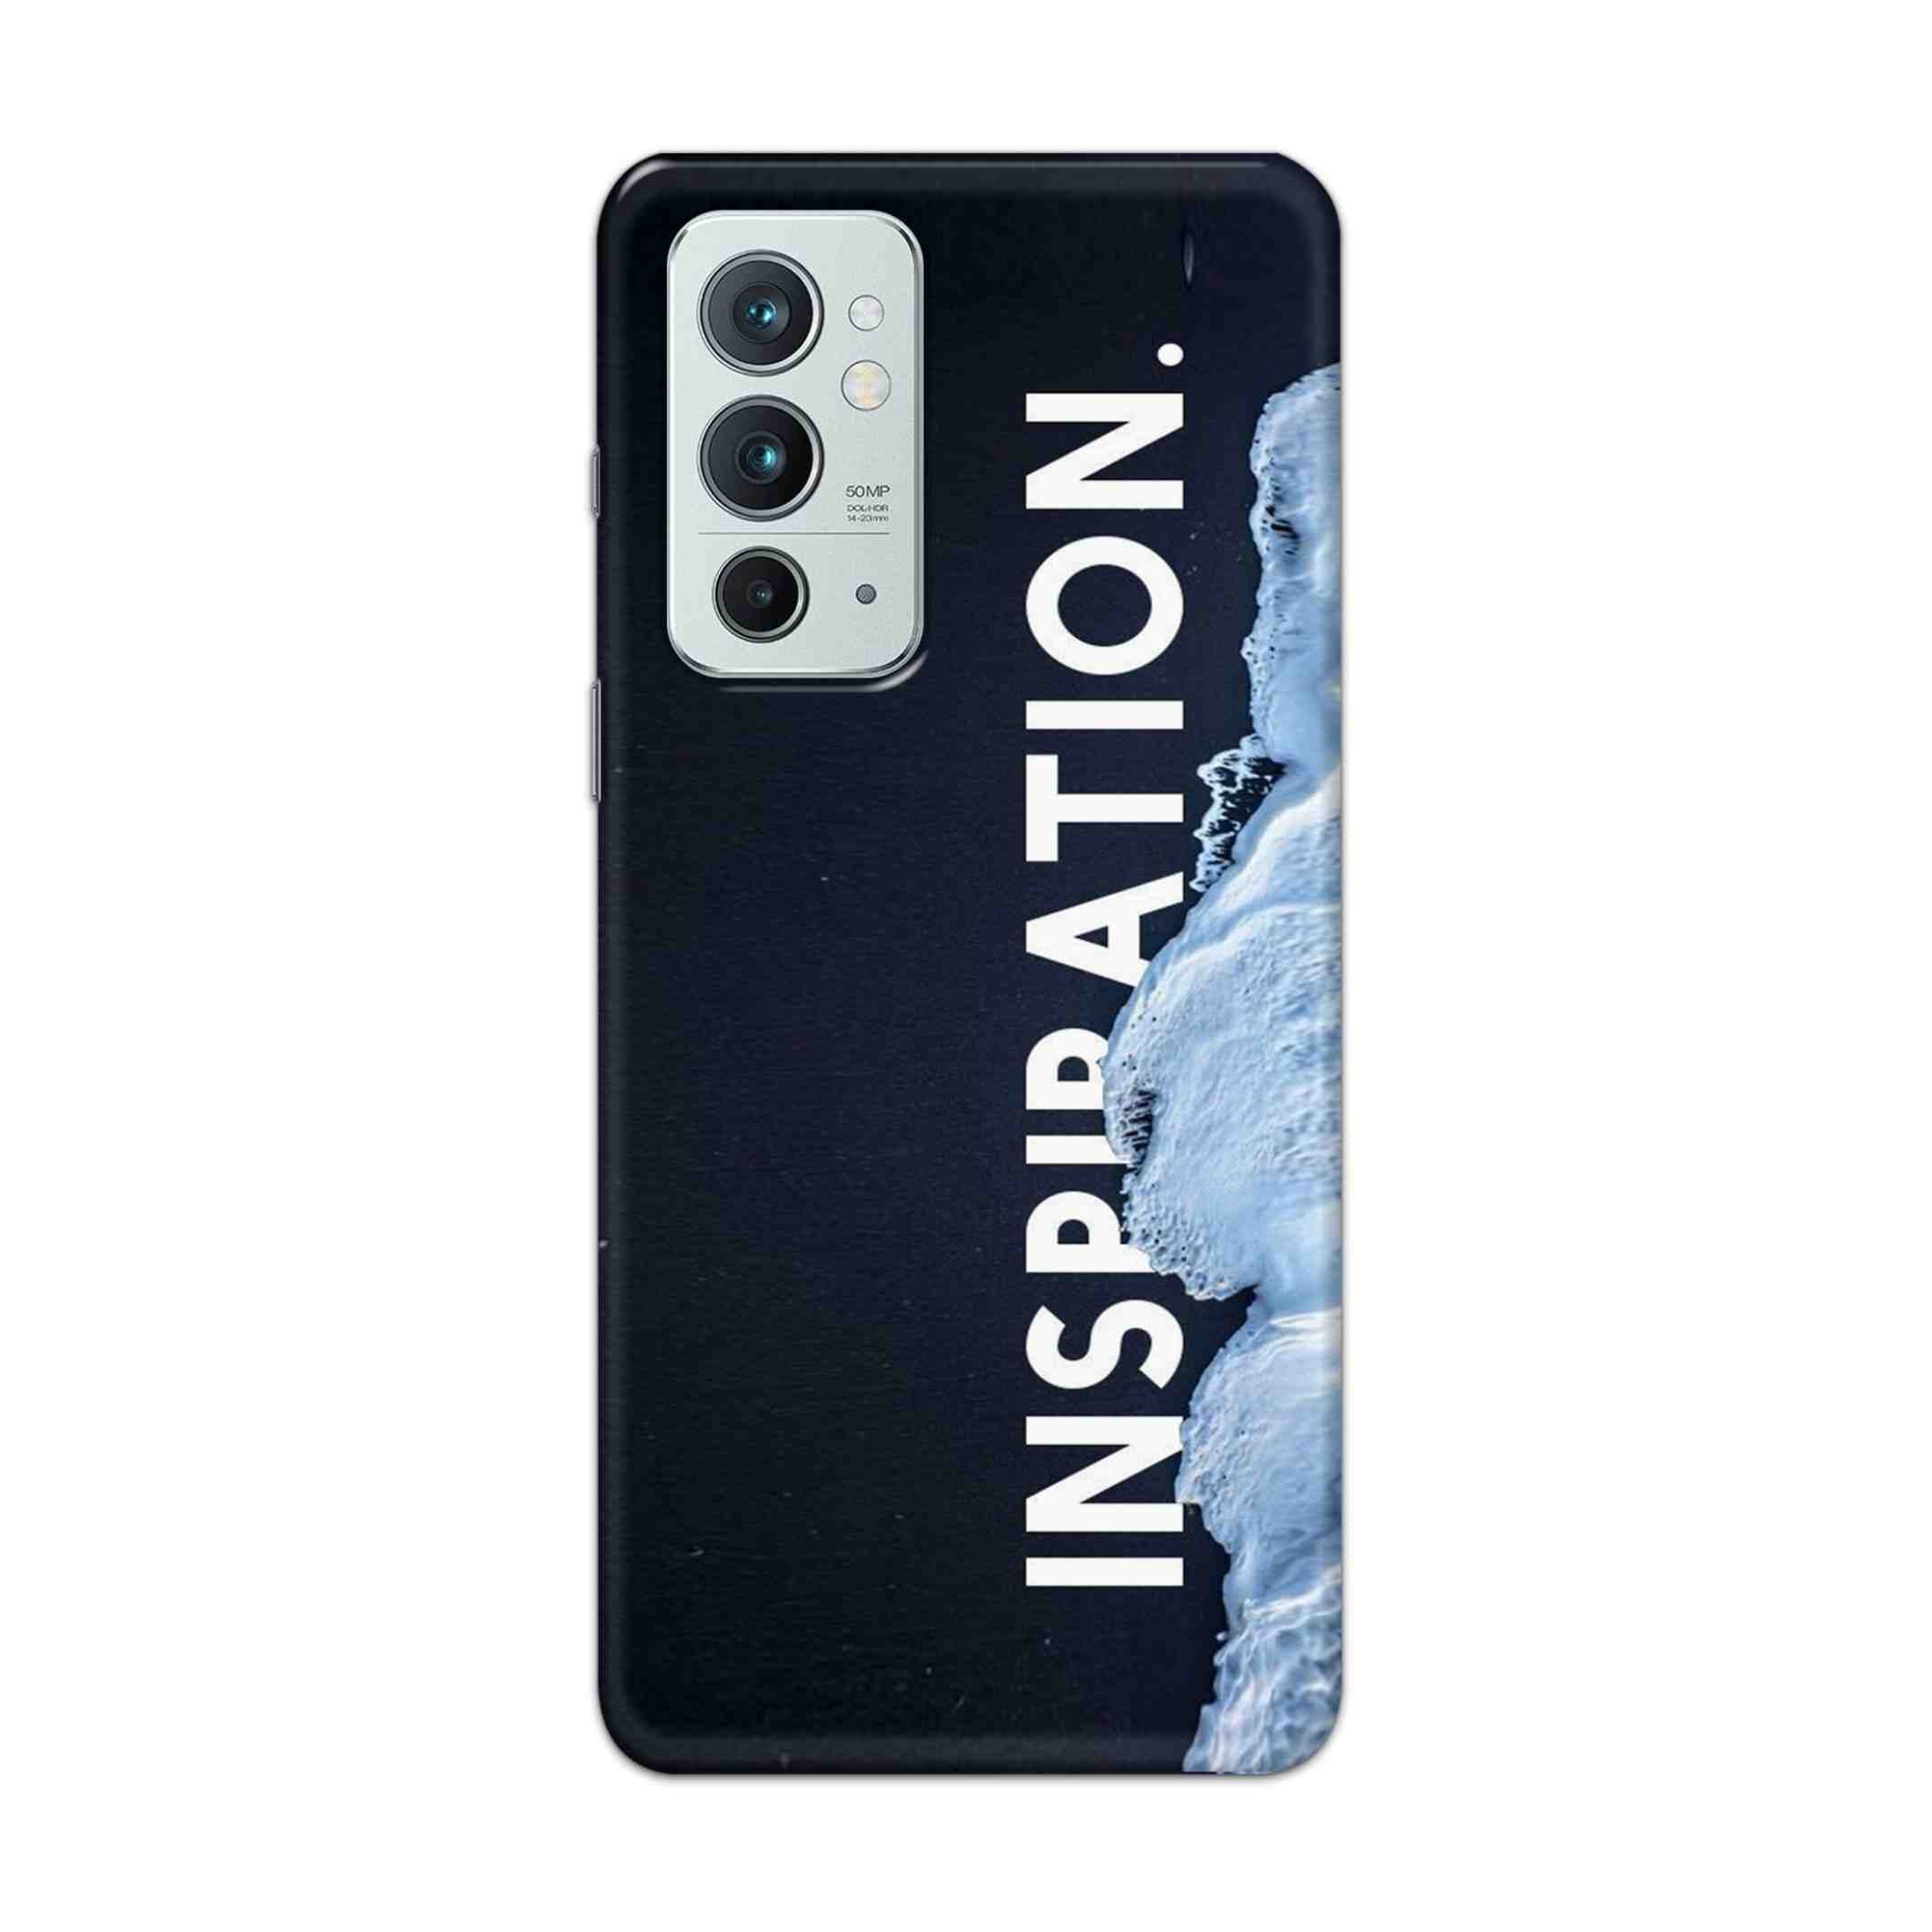 Buy Inspiration Hard Back Mobile Phone Case Cover For OnePlus 9RT 5G Online